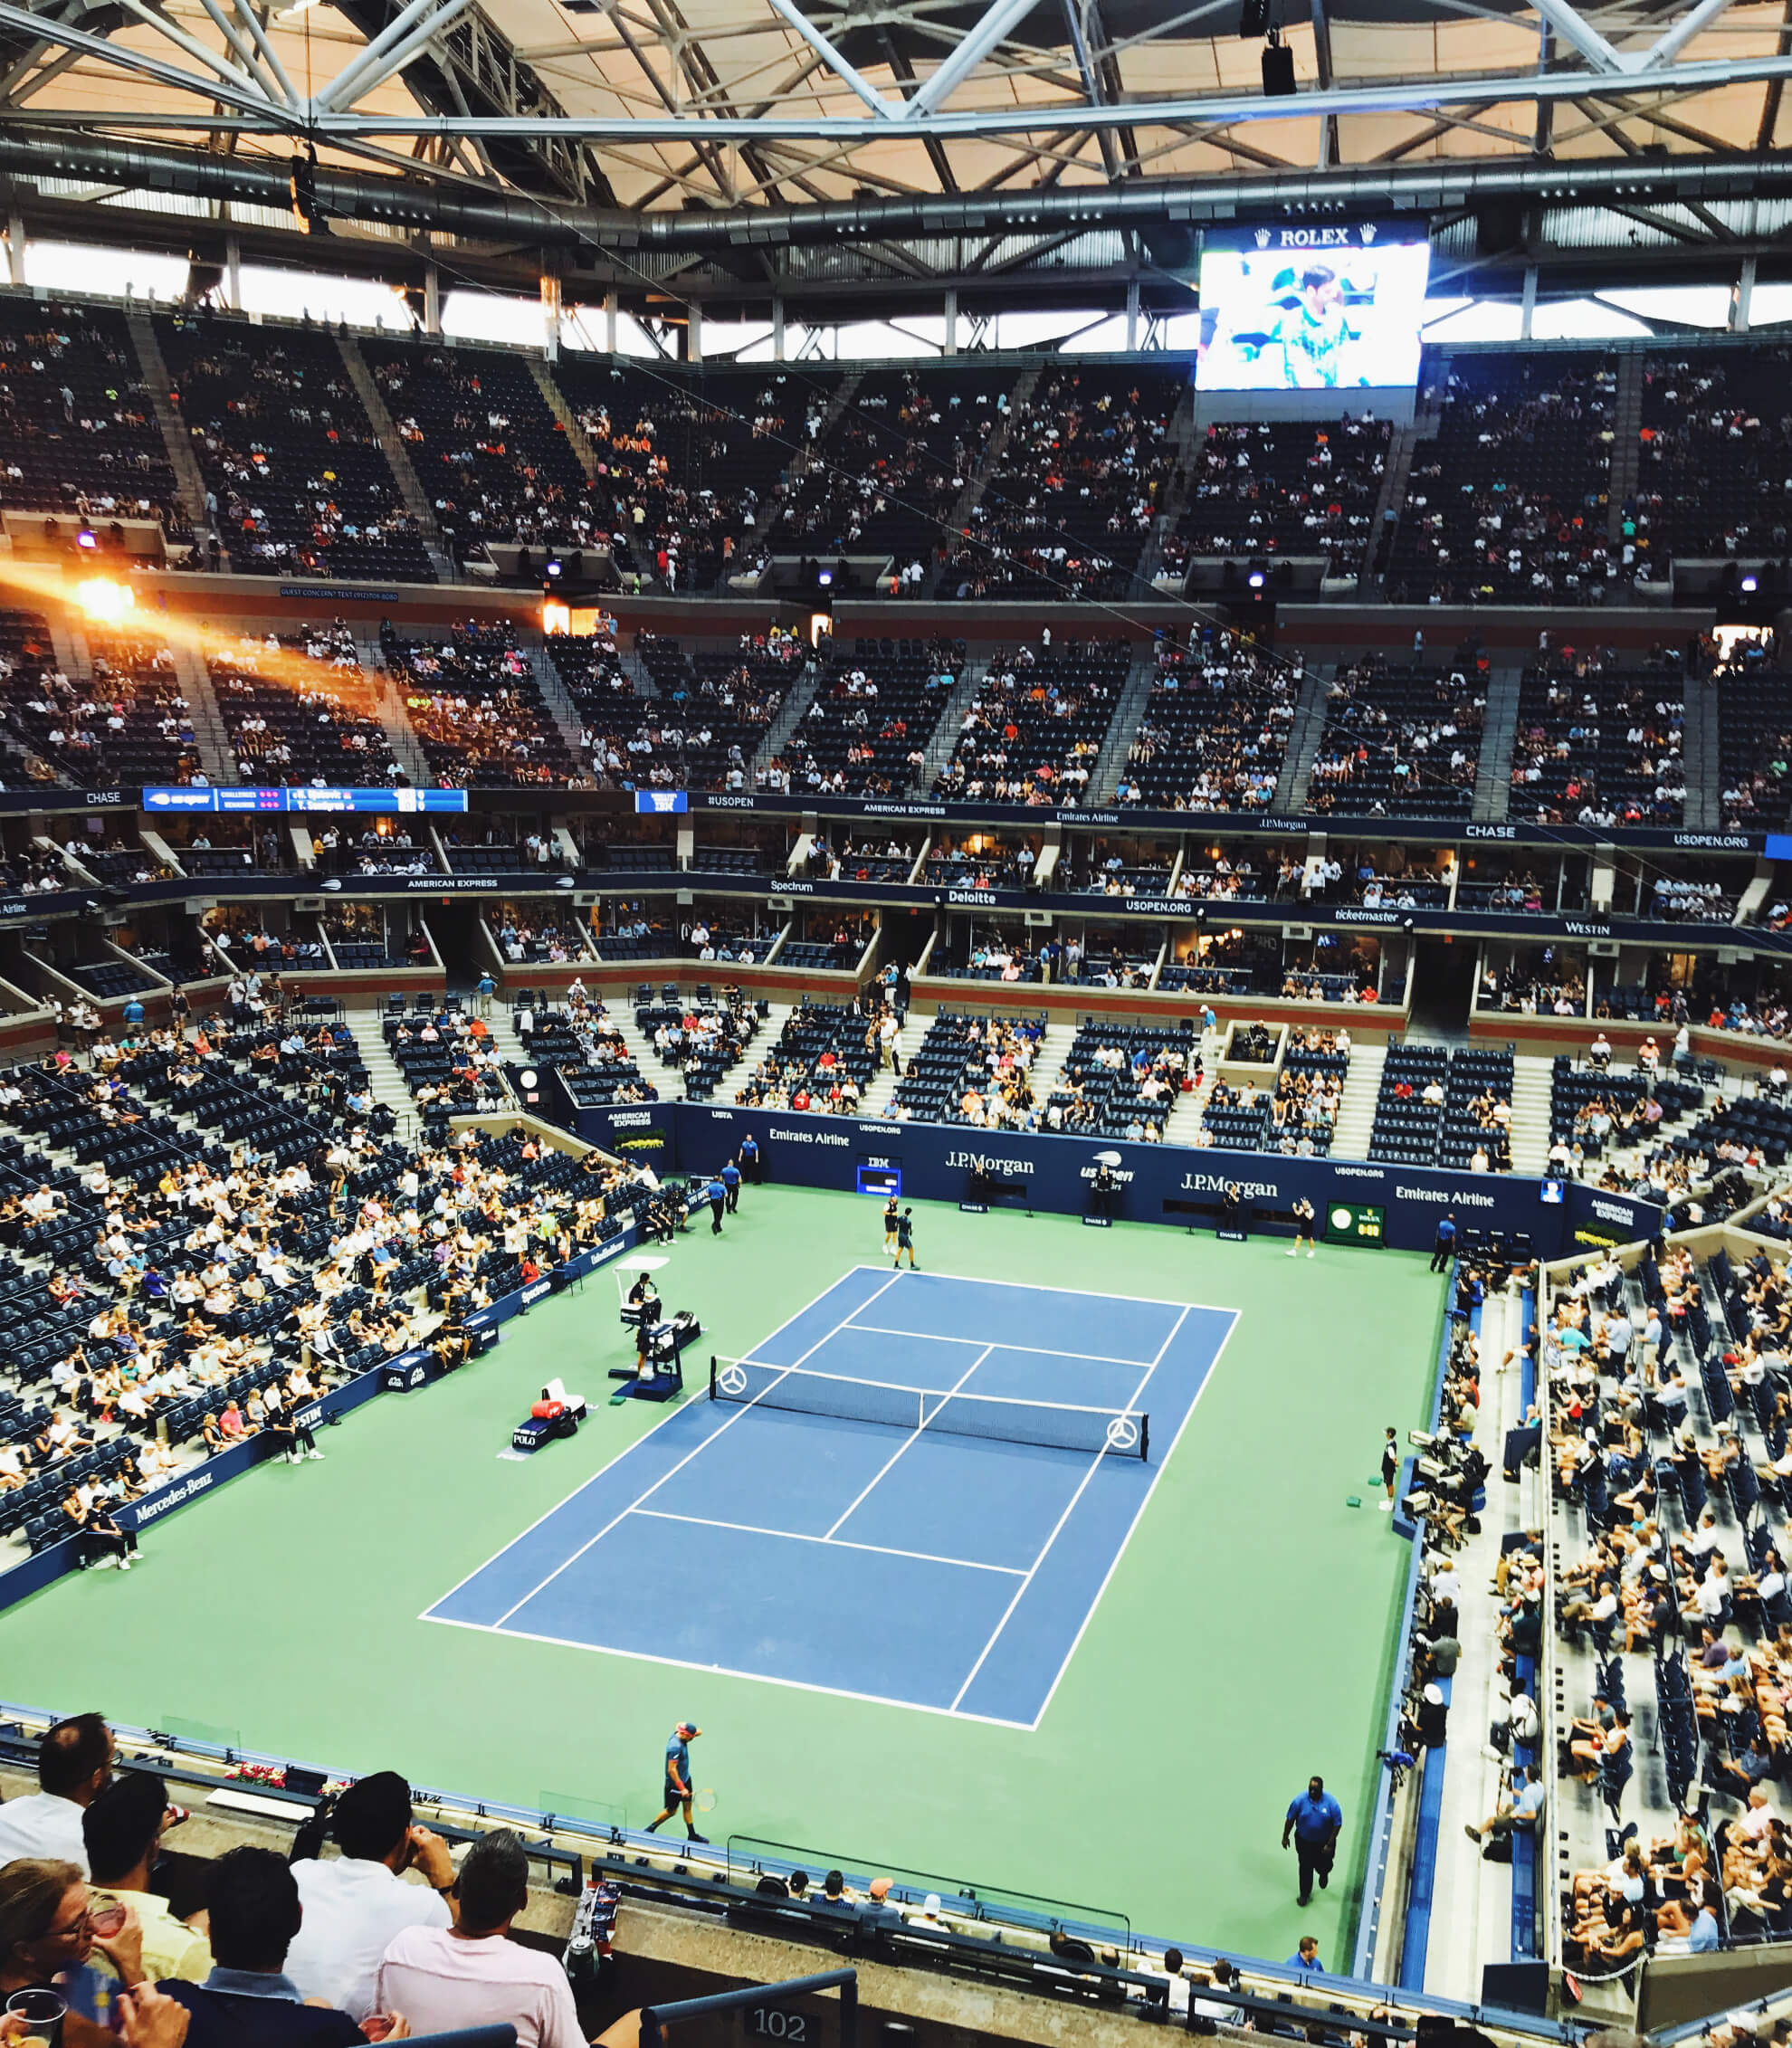 US Open Tennis Tournament, Tilden of To Be Bright